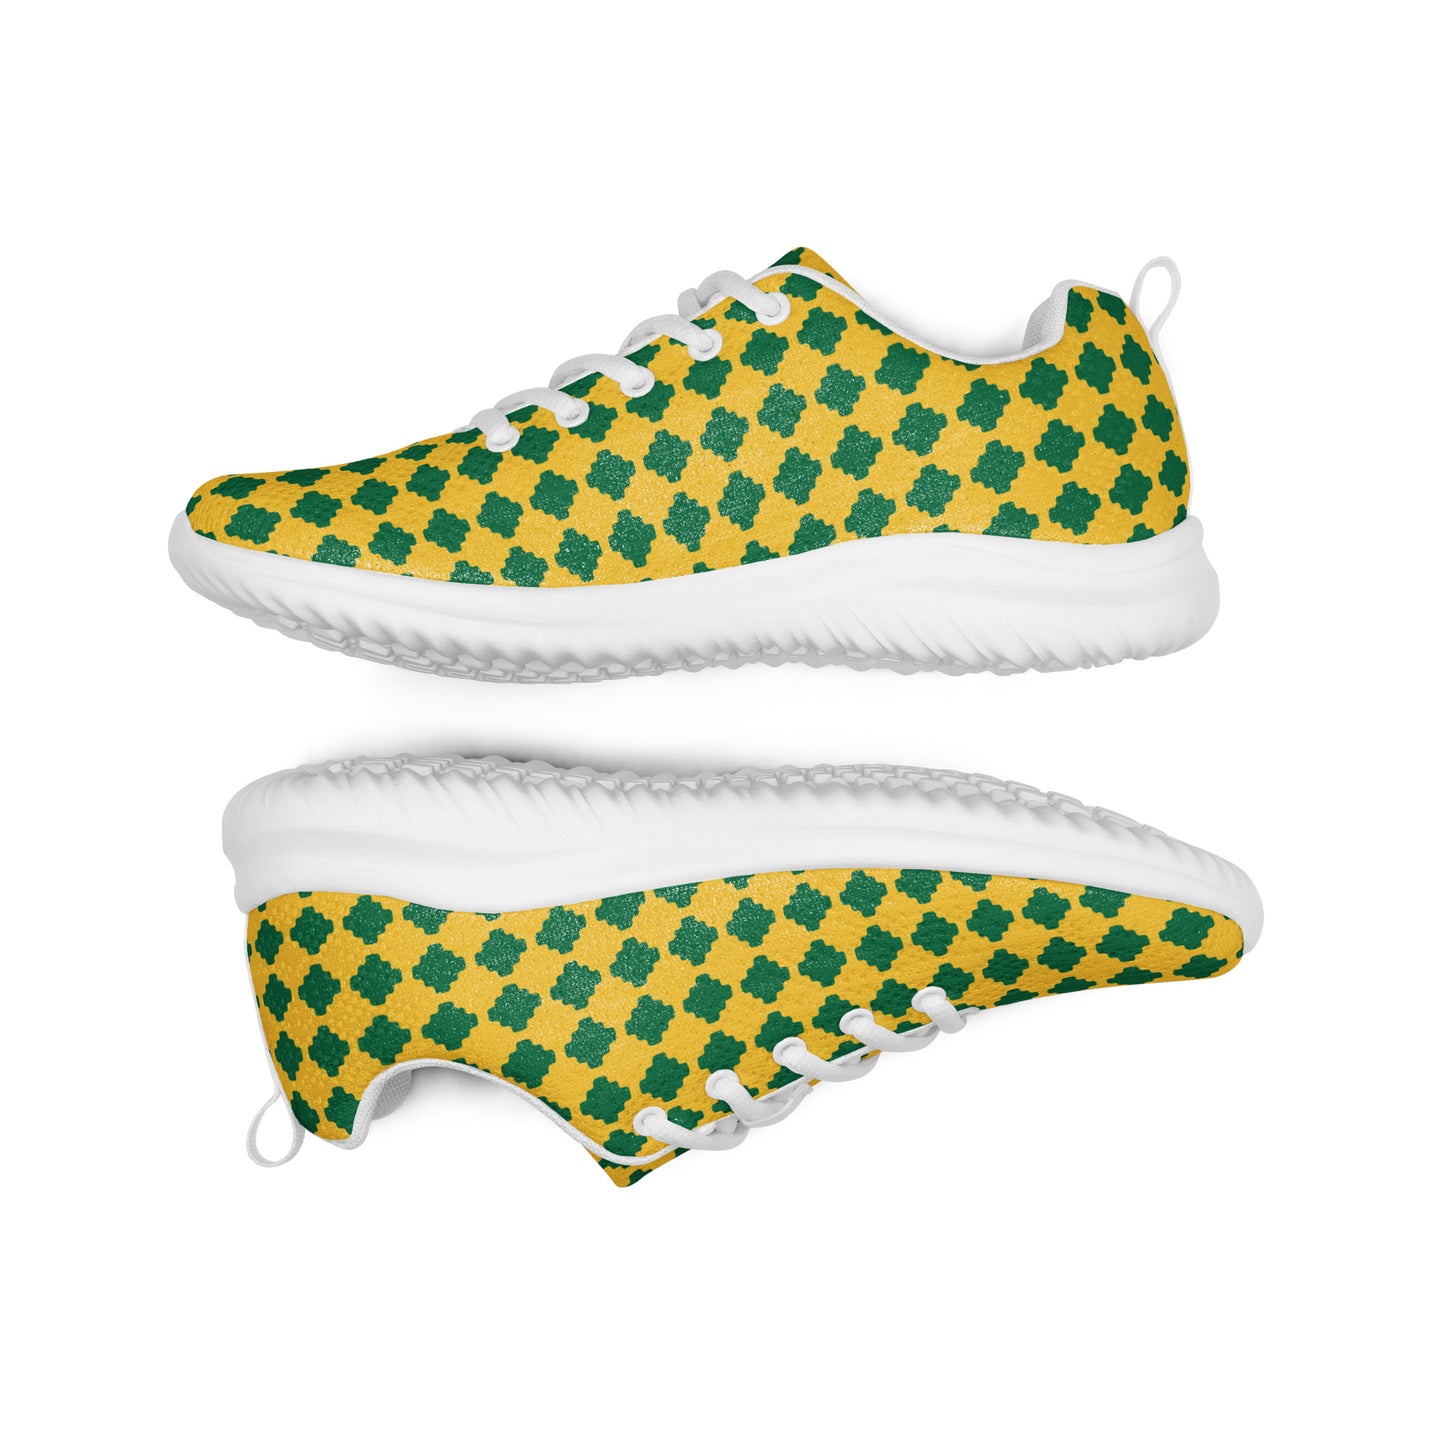 DASH Pixel Green Gold Men’s Athletic Shoes Lightweight Breathable Design by IOBI Original Apparel